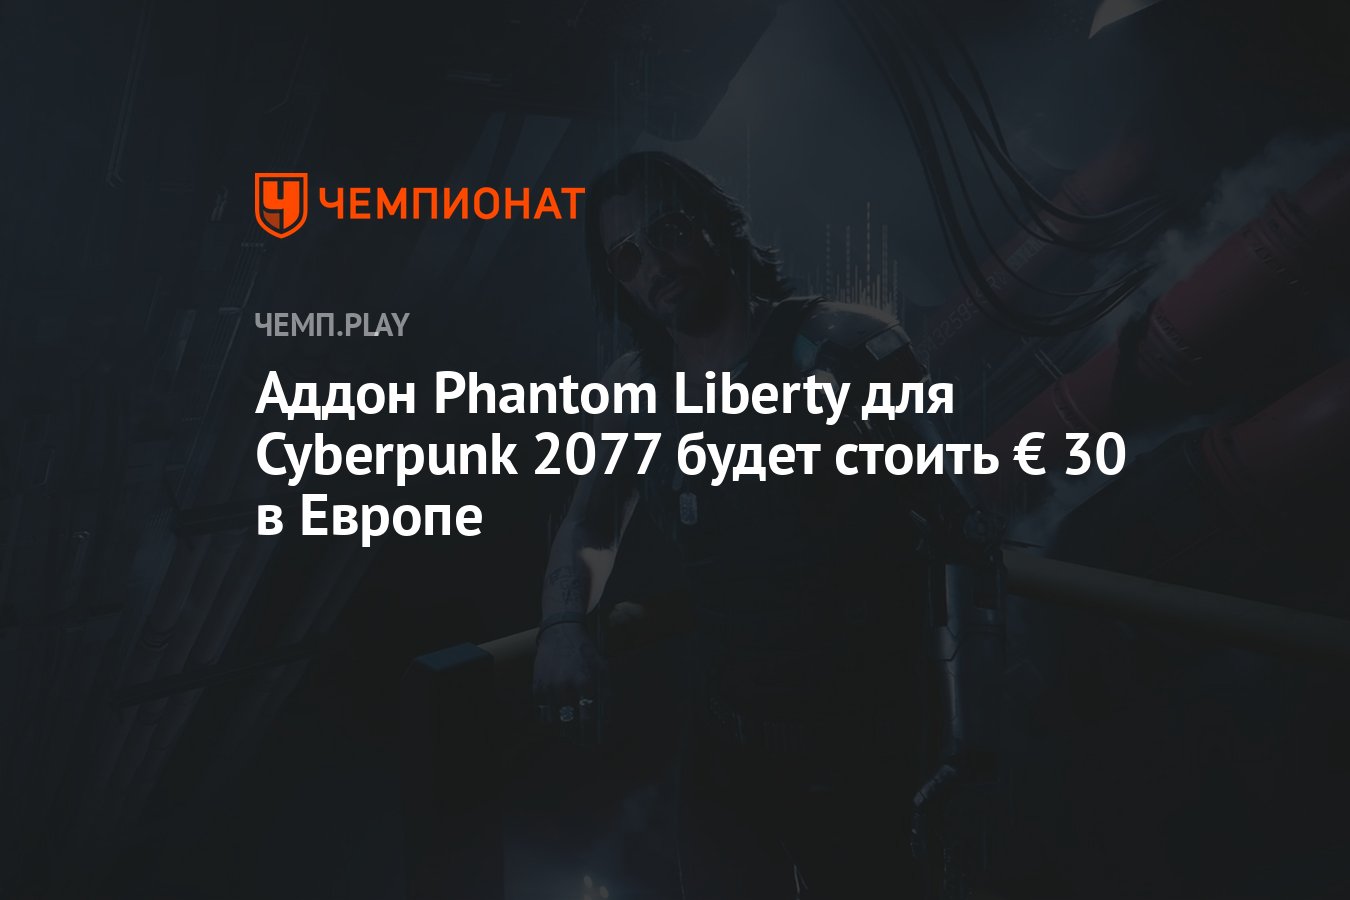 Отсутствие файлов скриптов cyberpunk 2077. Cyberpunk 2077 Fantom Liberty.